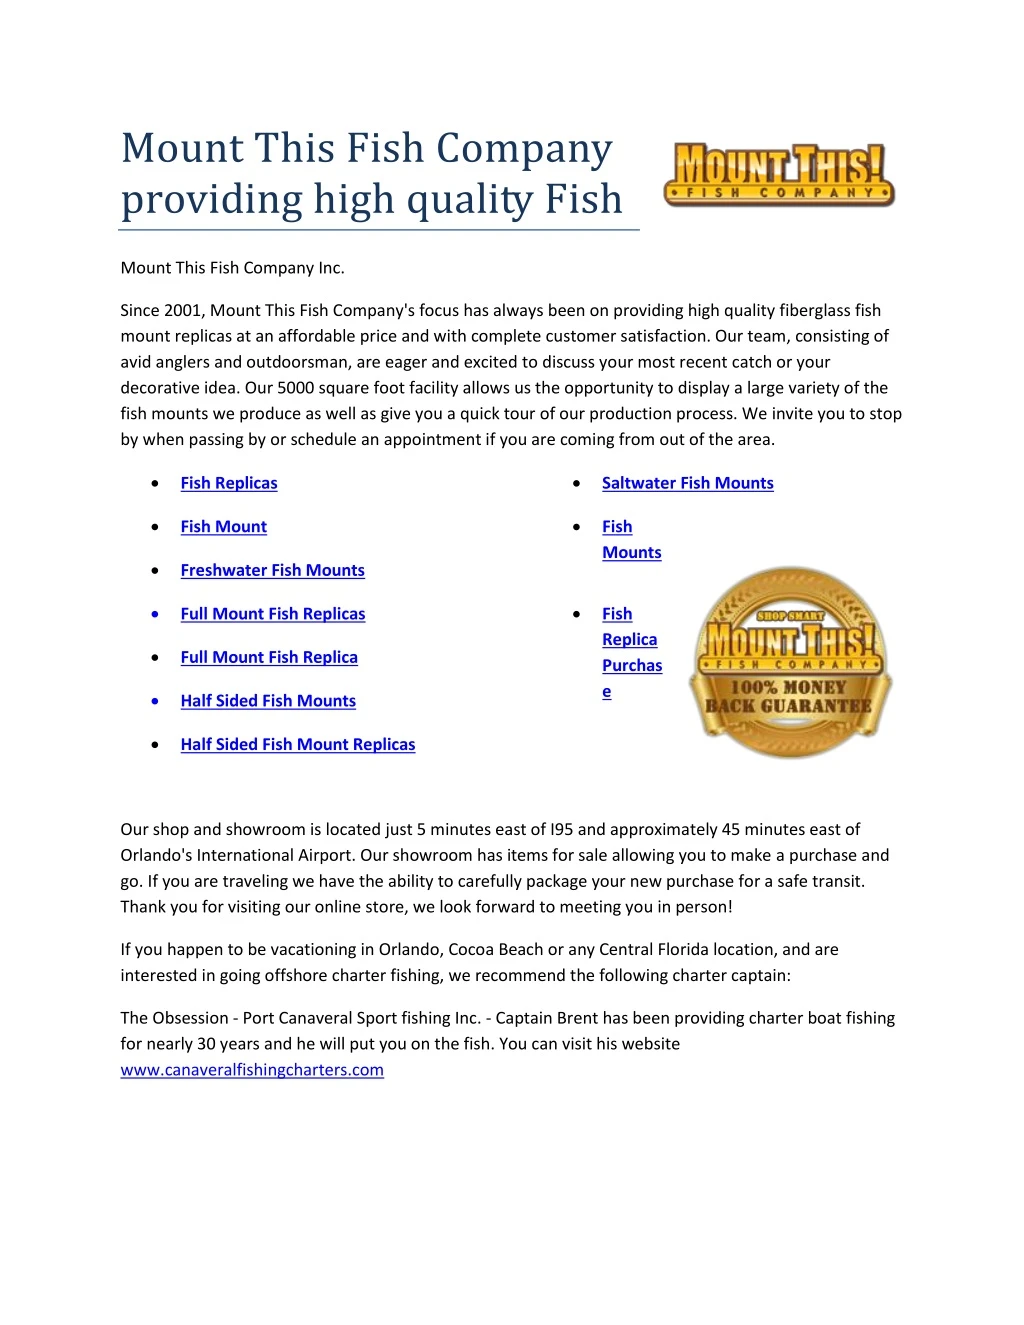 mount this fish company providing high quality